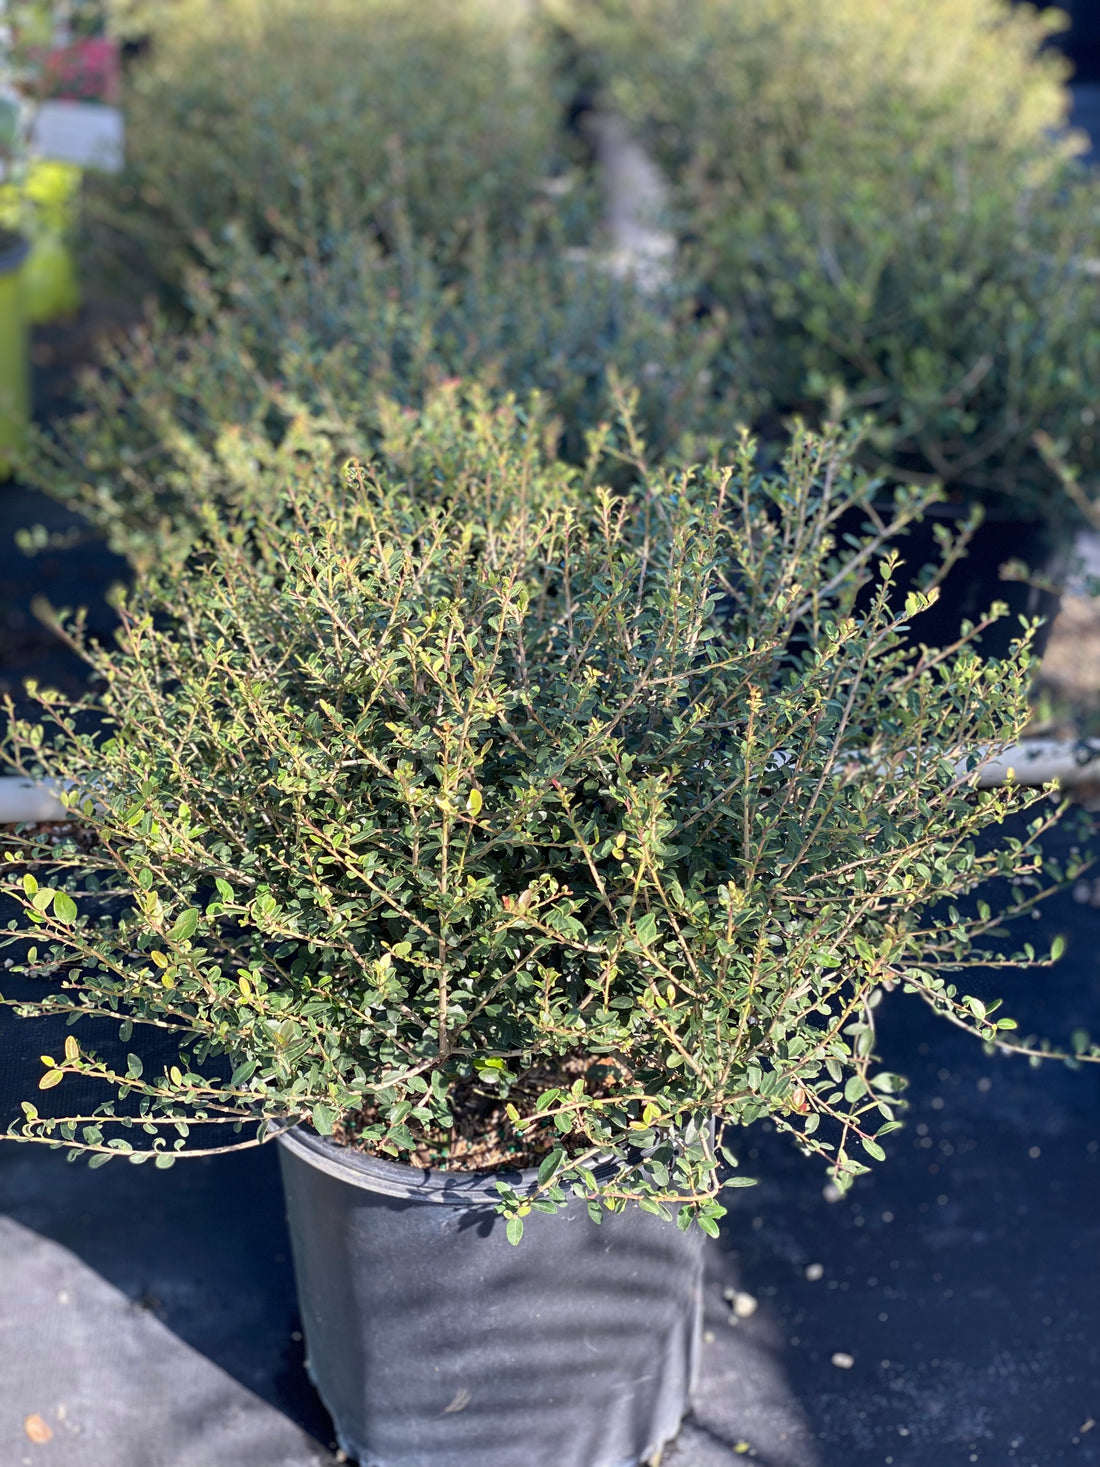 Southern Red Cedar, Juniperus silicicola in a pot